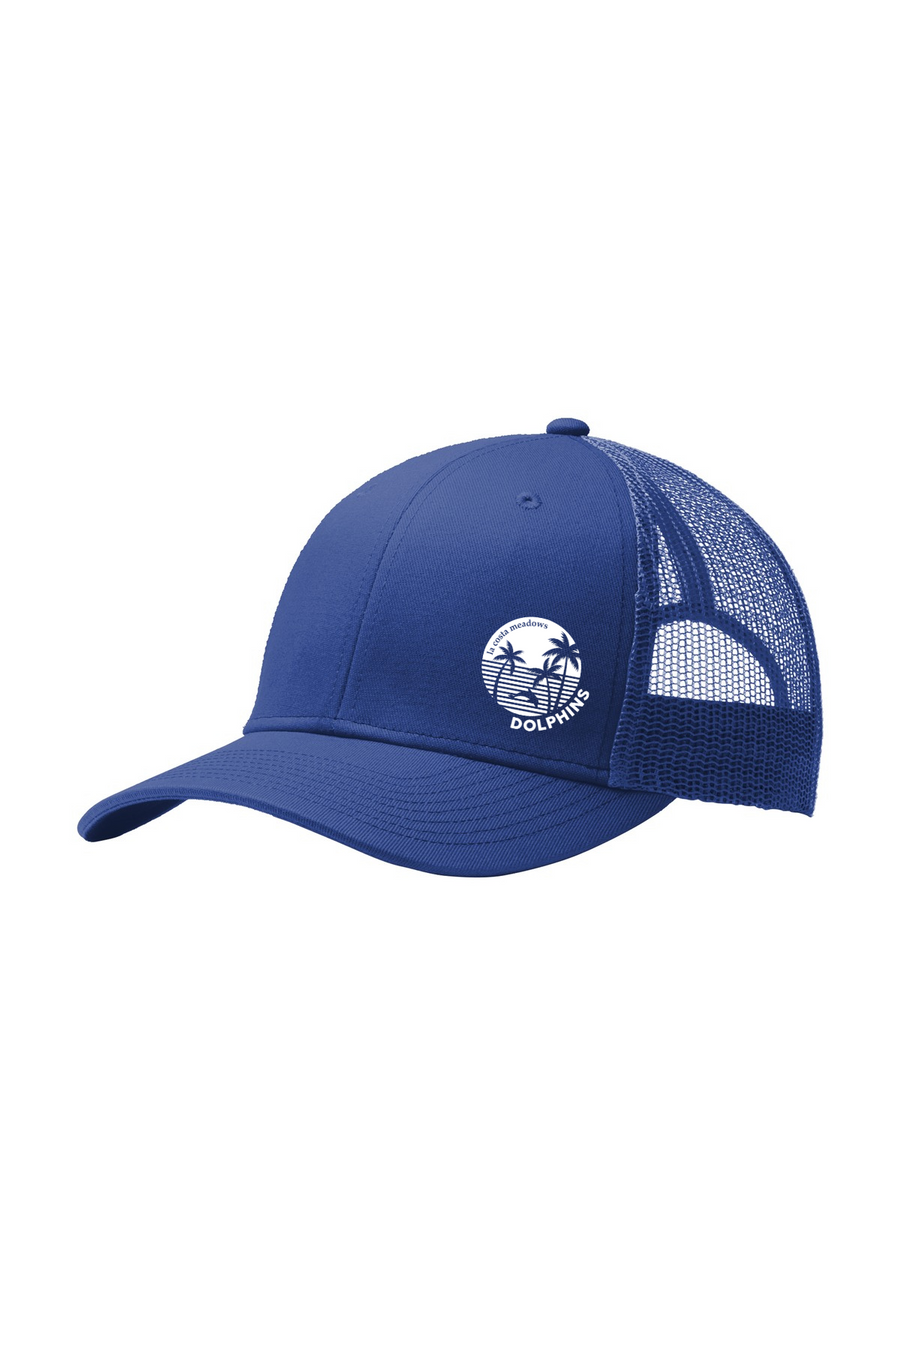 La Costa Meadows Spirit Wear 2023-24 On-Demand-Port Authority Snapback Trucker Hat